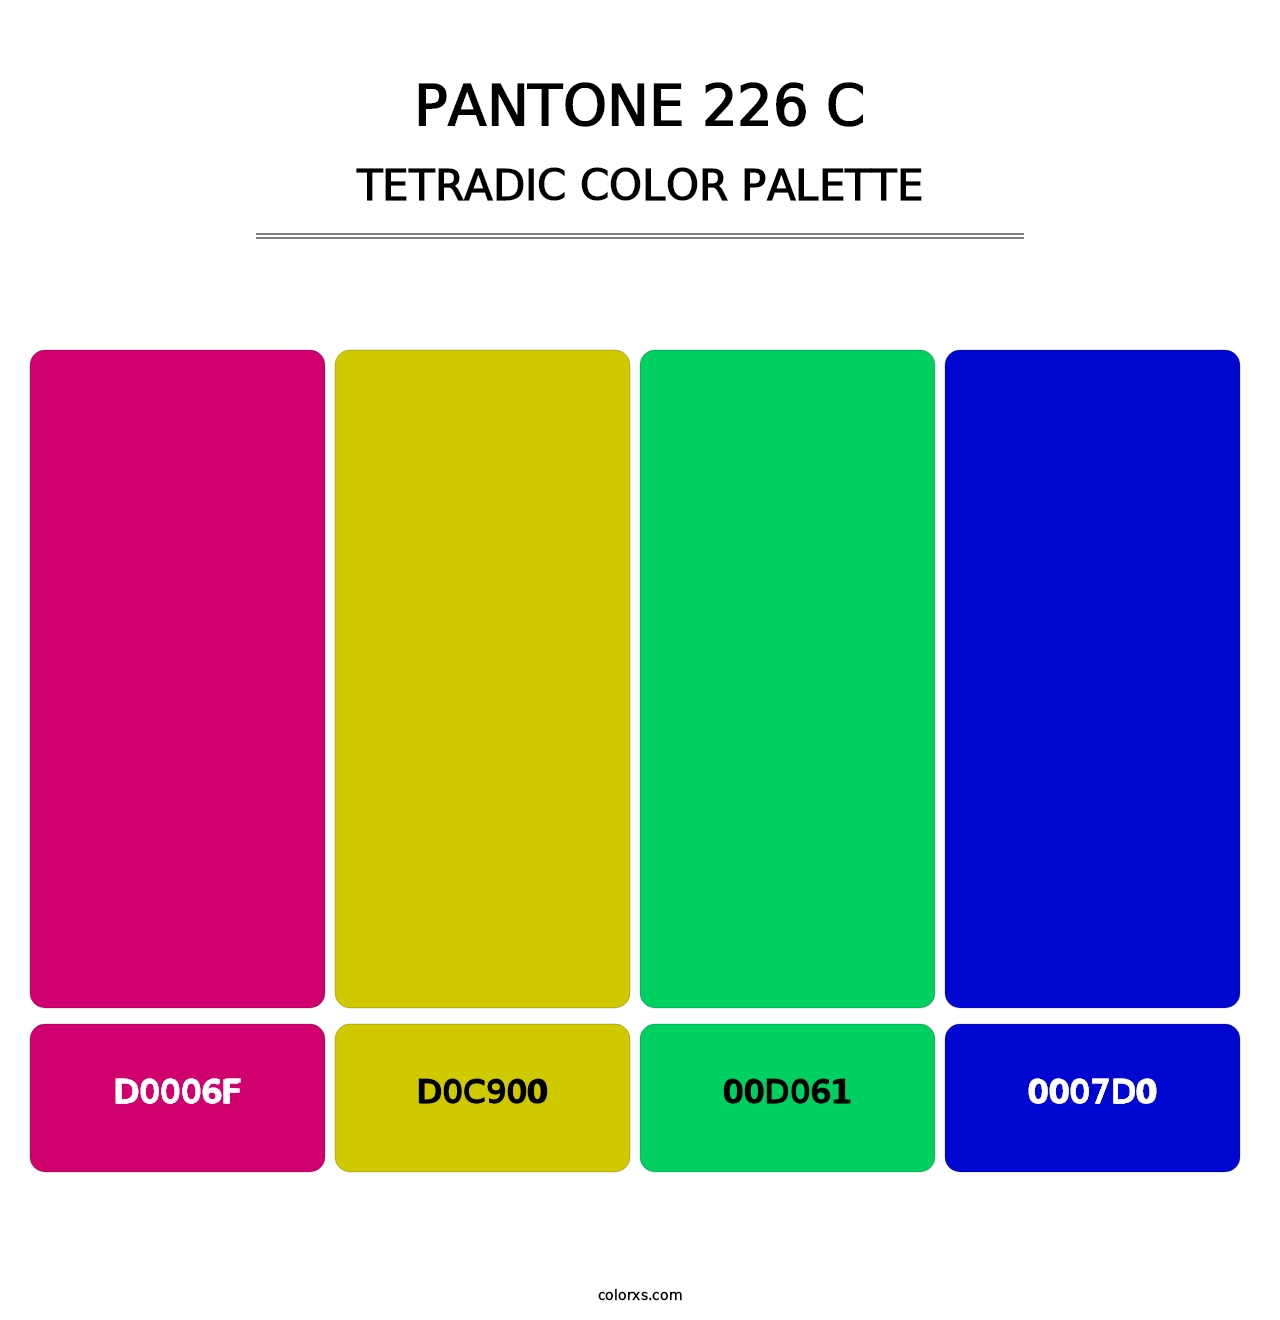 PANTONE 226 C - Tetradic Color Palette